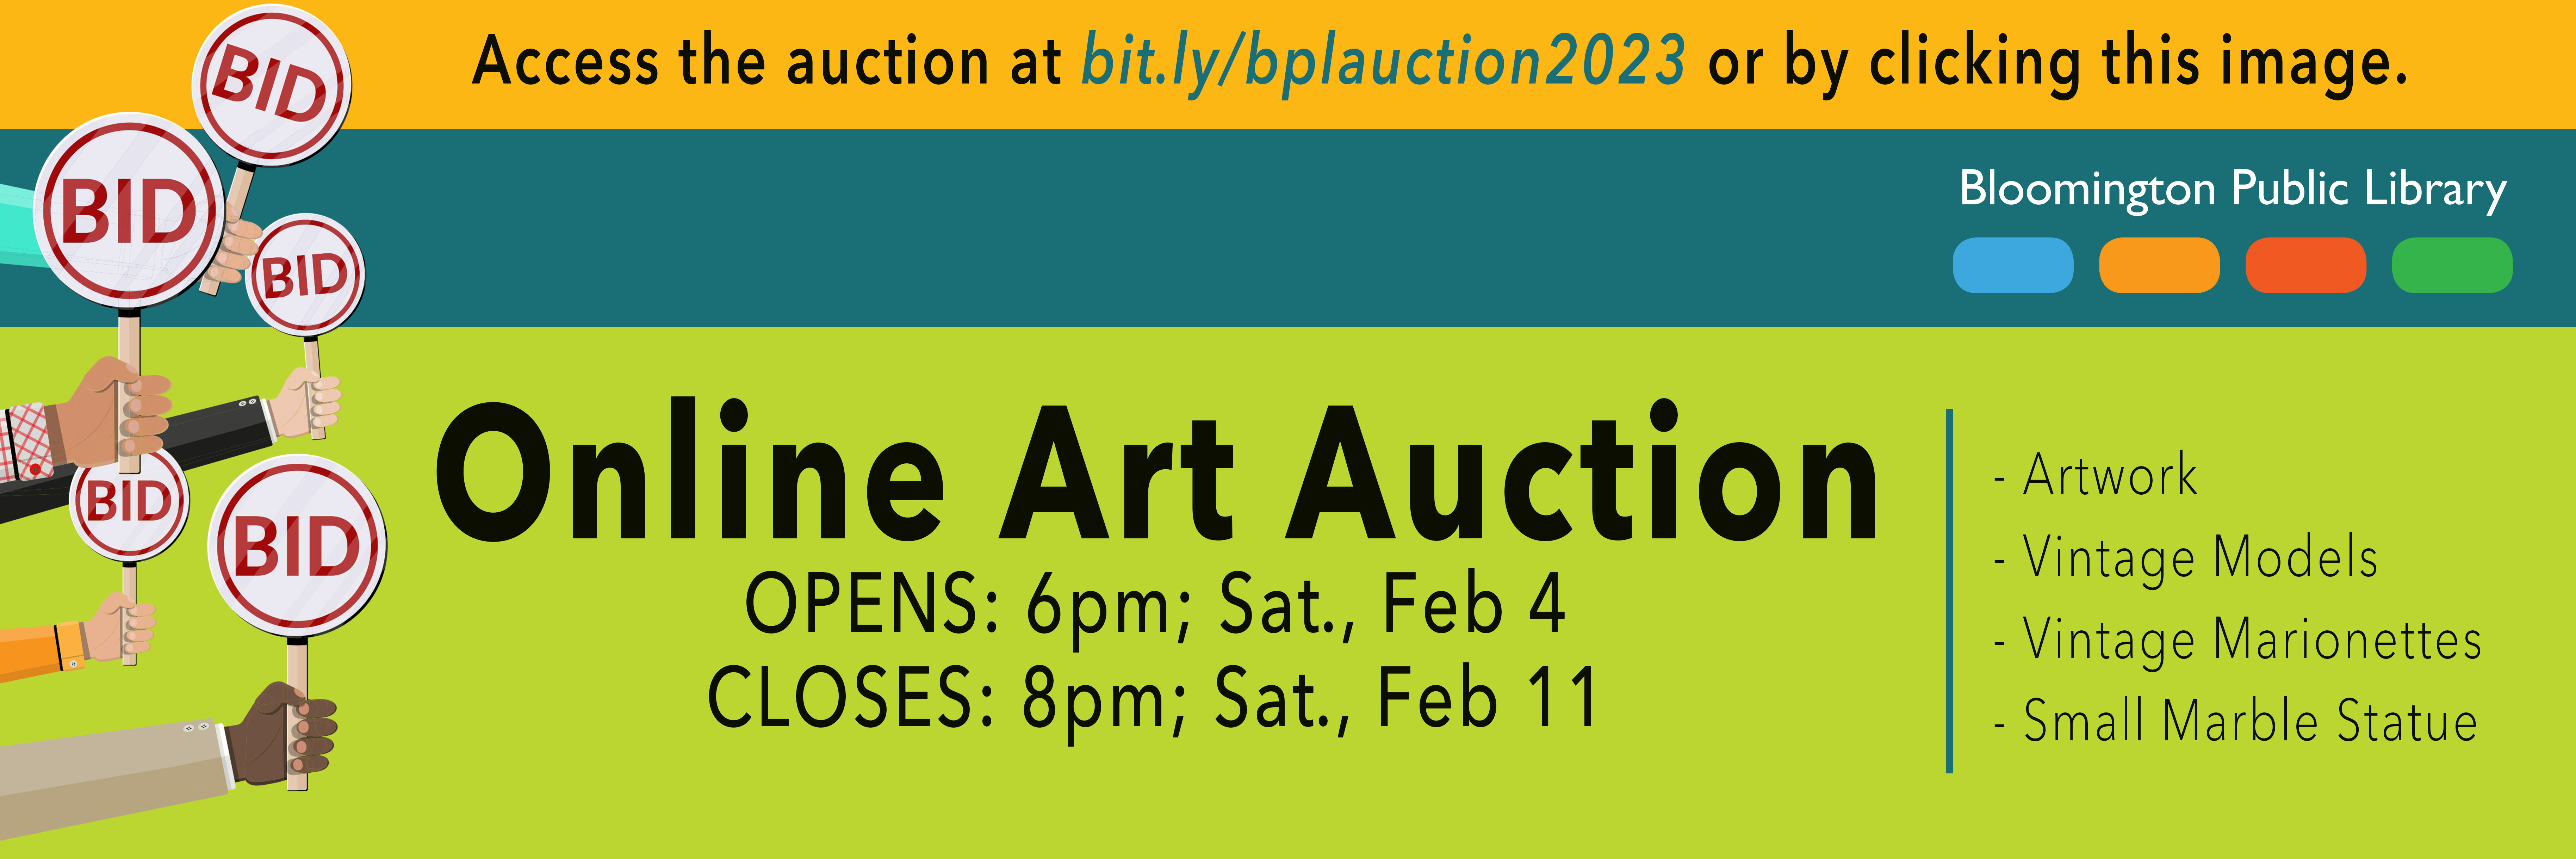 Art Auction information